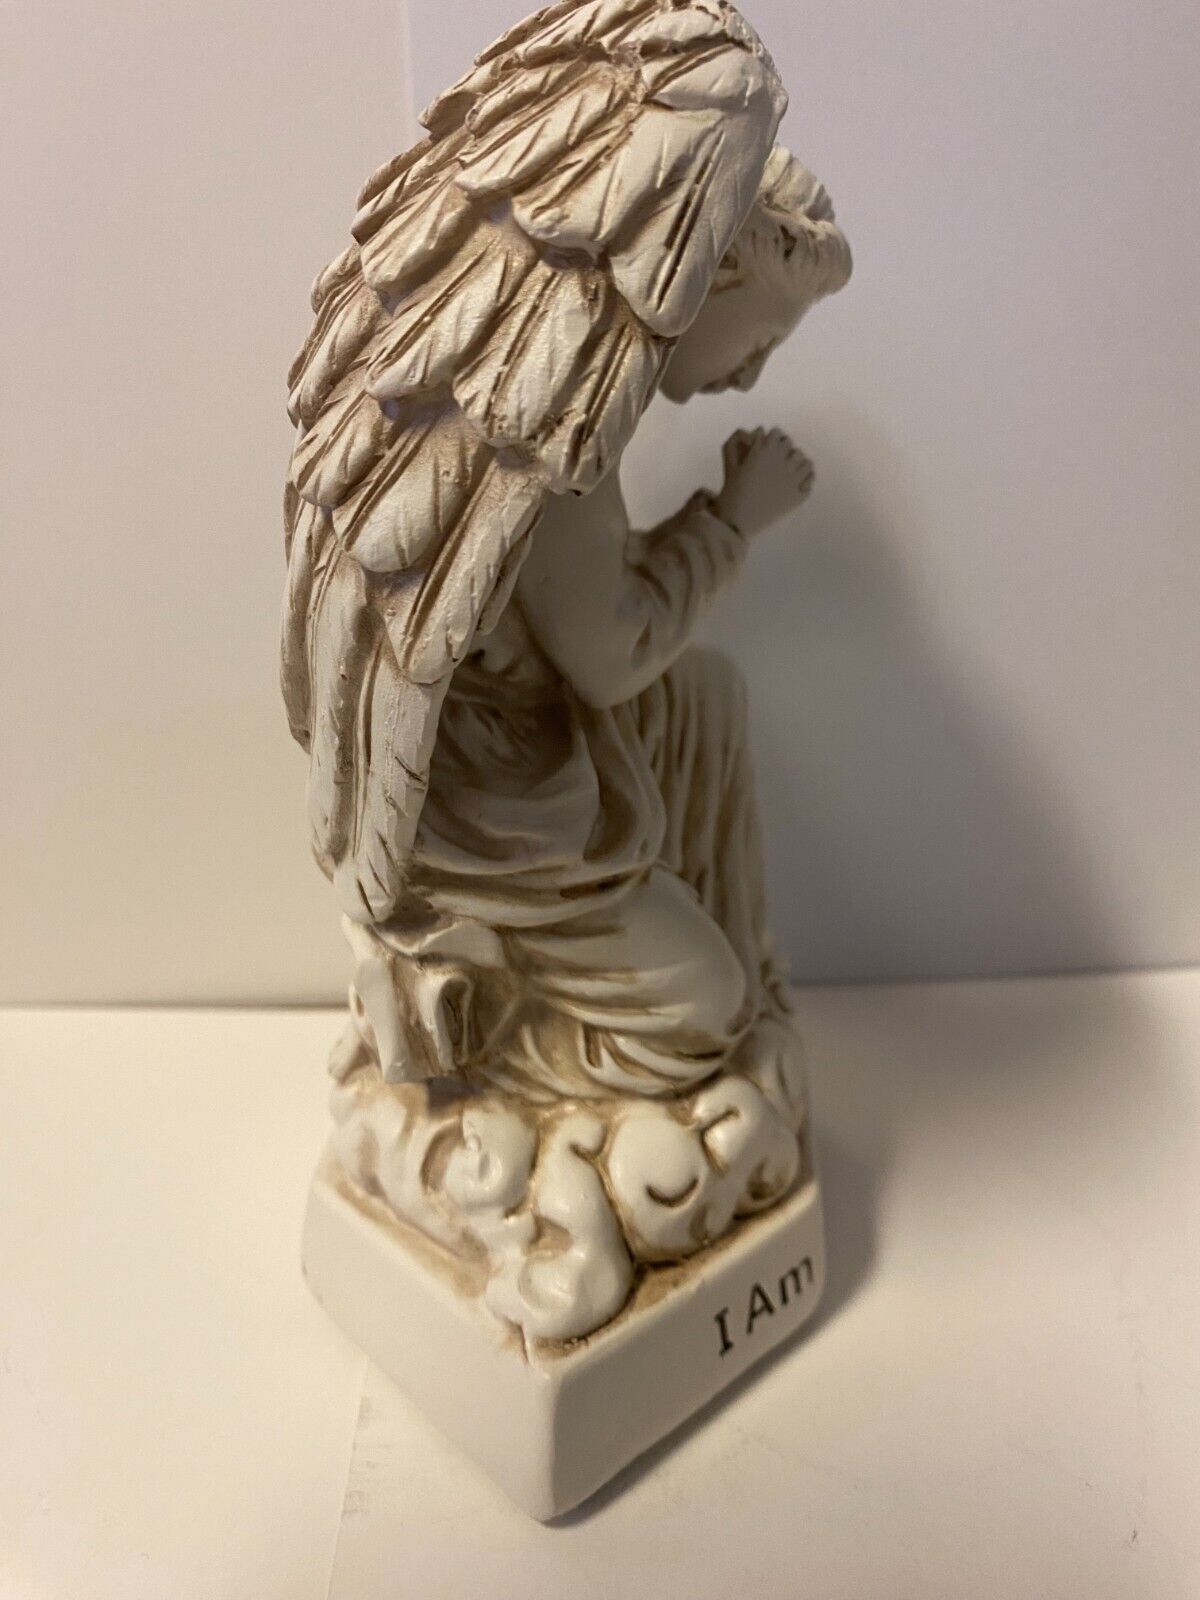 Memorial  Angel 6.25" Figurine, New